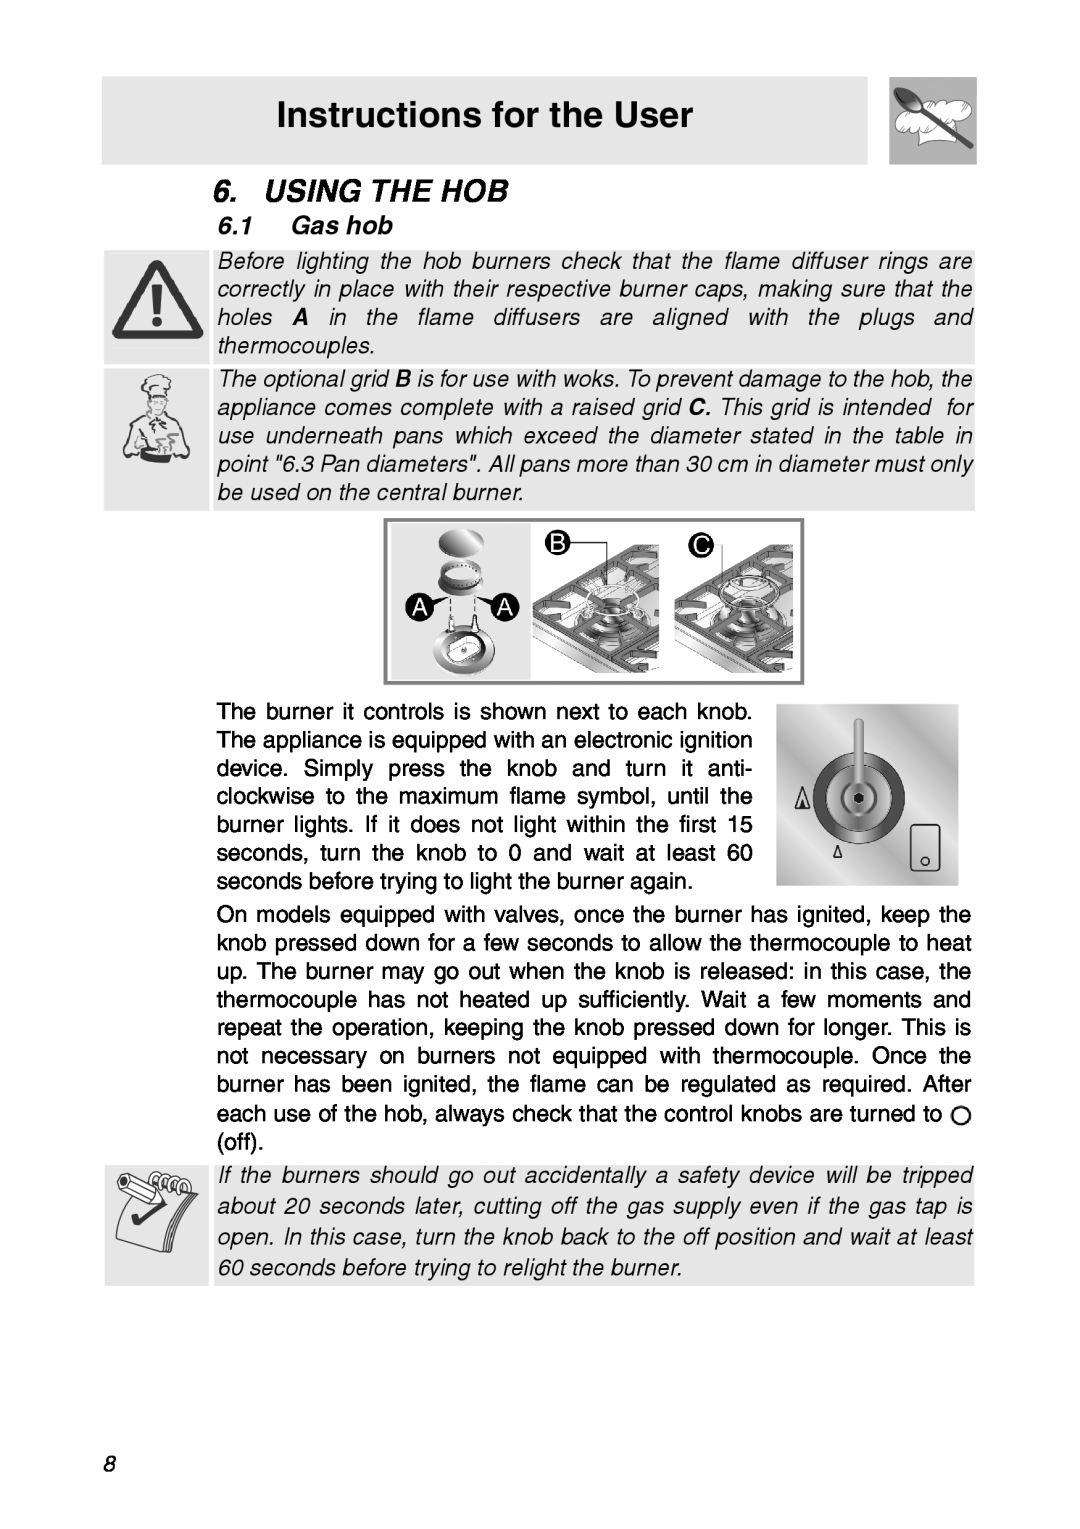 Smeg CIR900X manual Using The Hob, Instructions for the User, 6.1Gas hob 